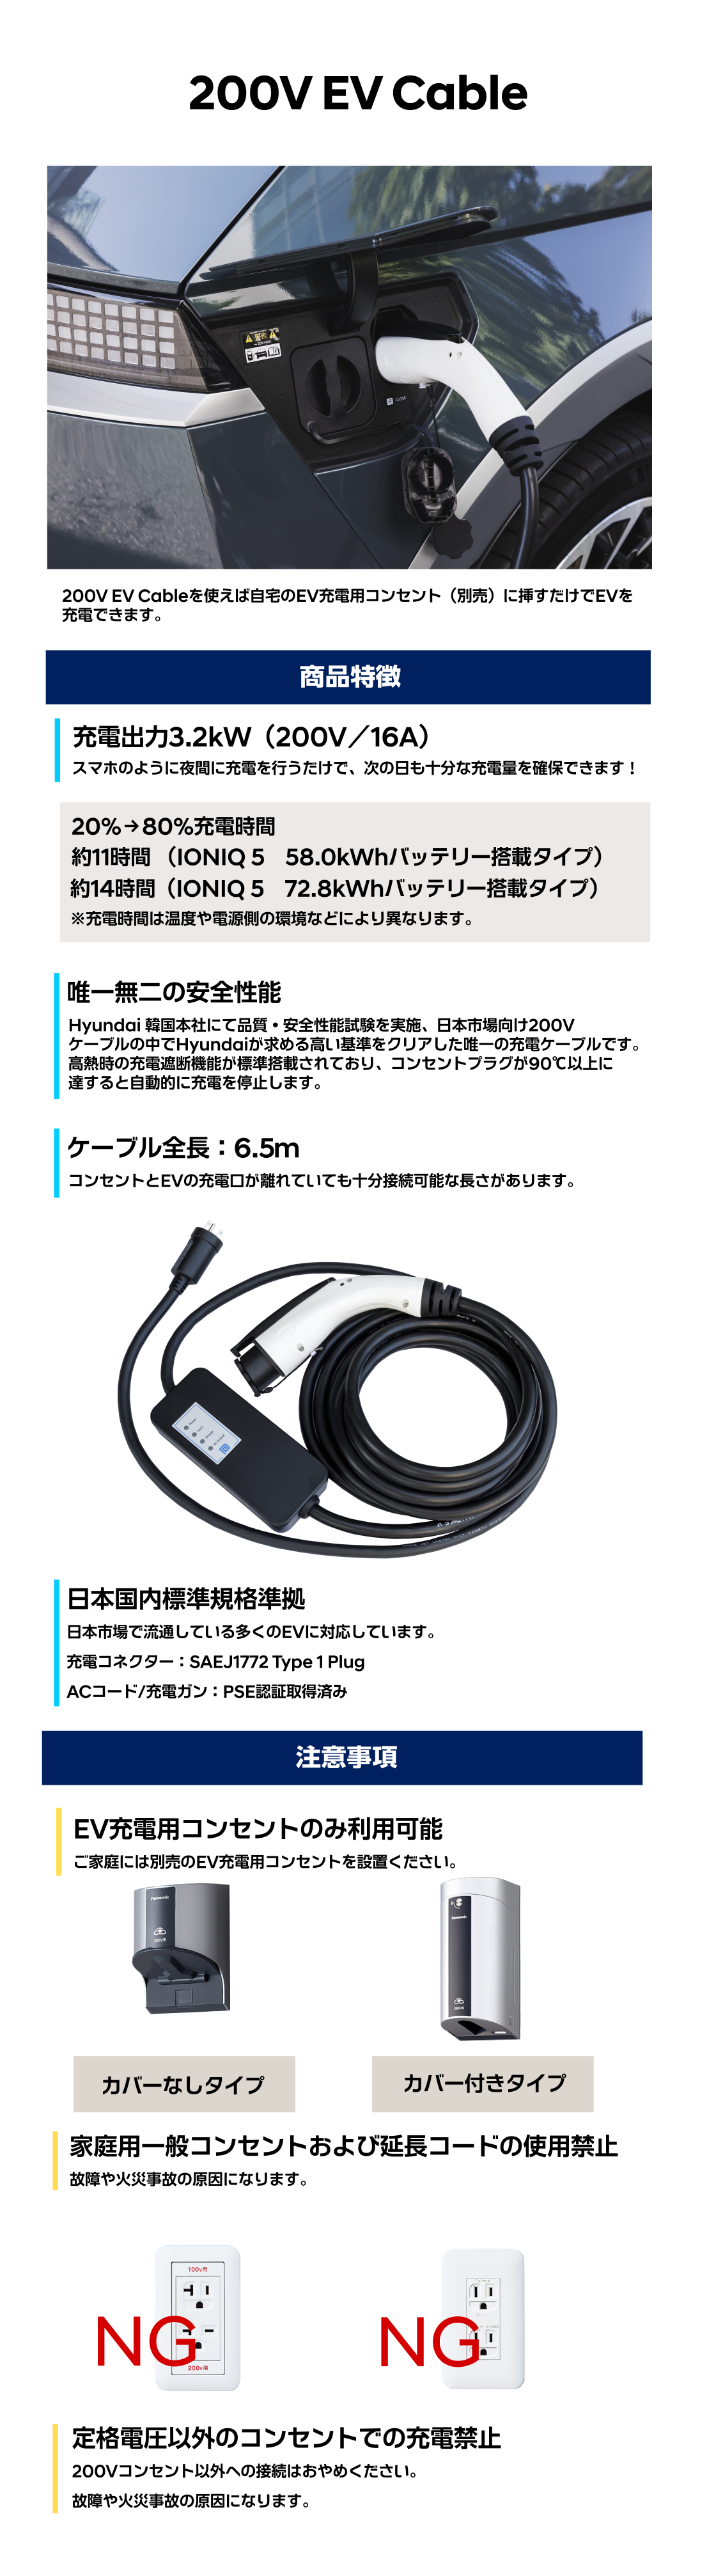 200V EV Cable-ヒュンダイ ジャパン オンラインショップ